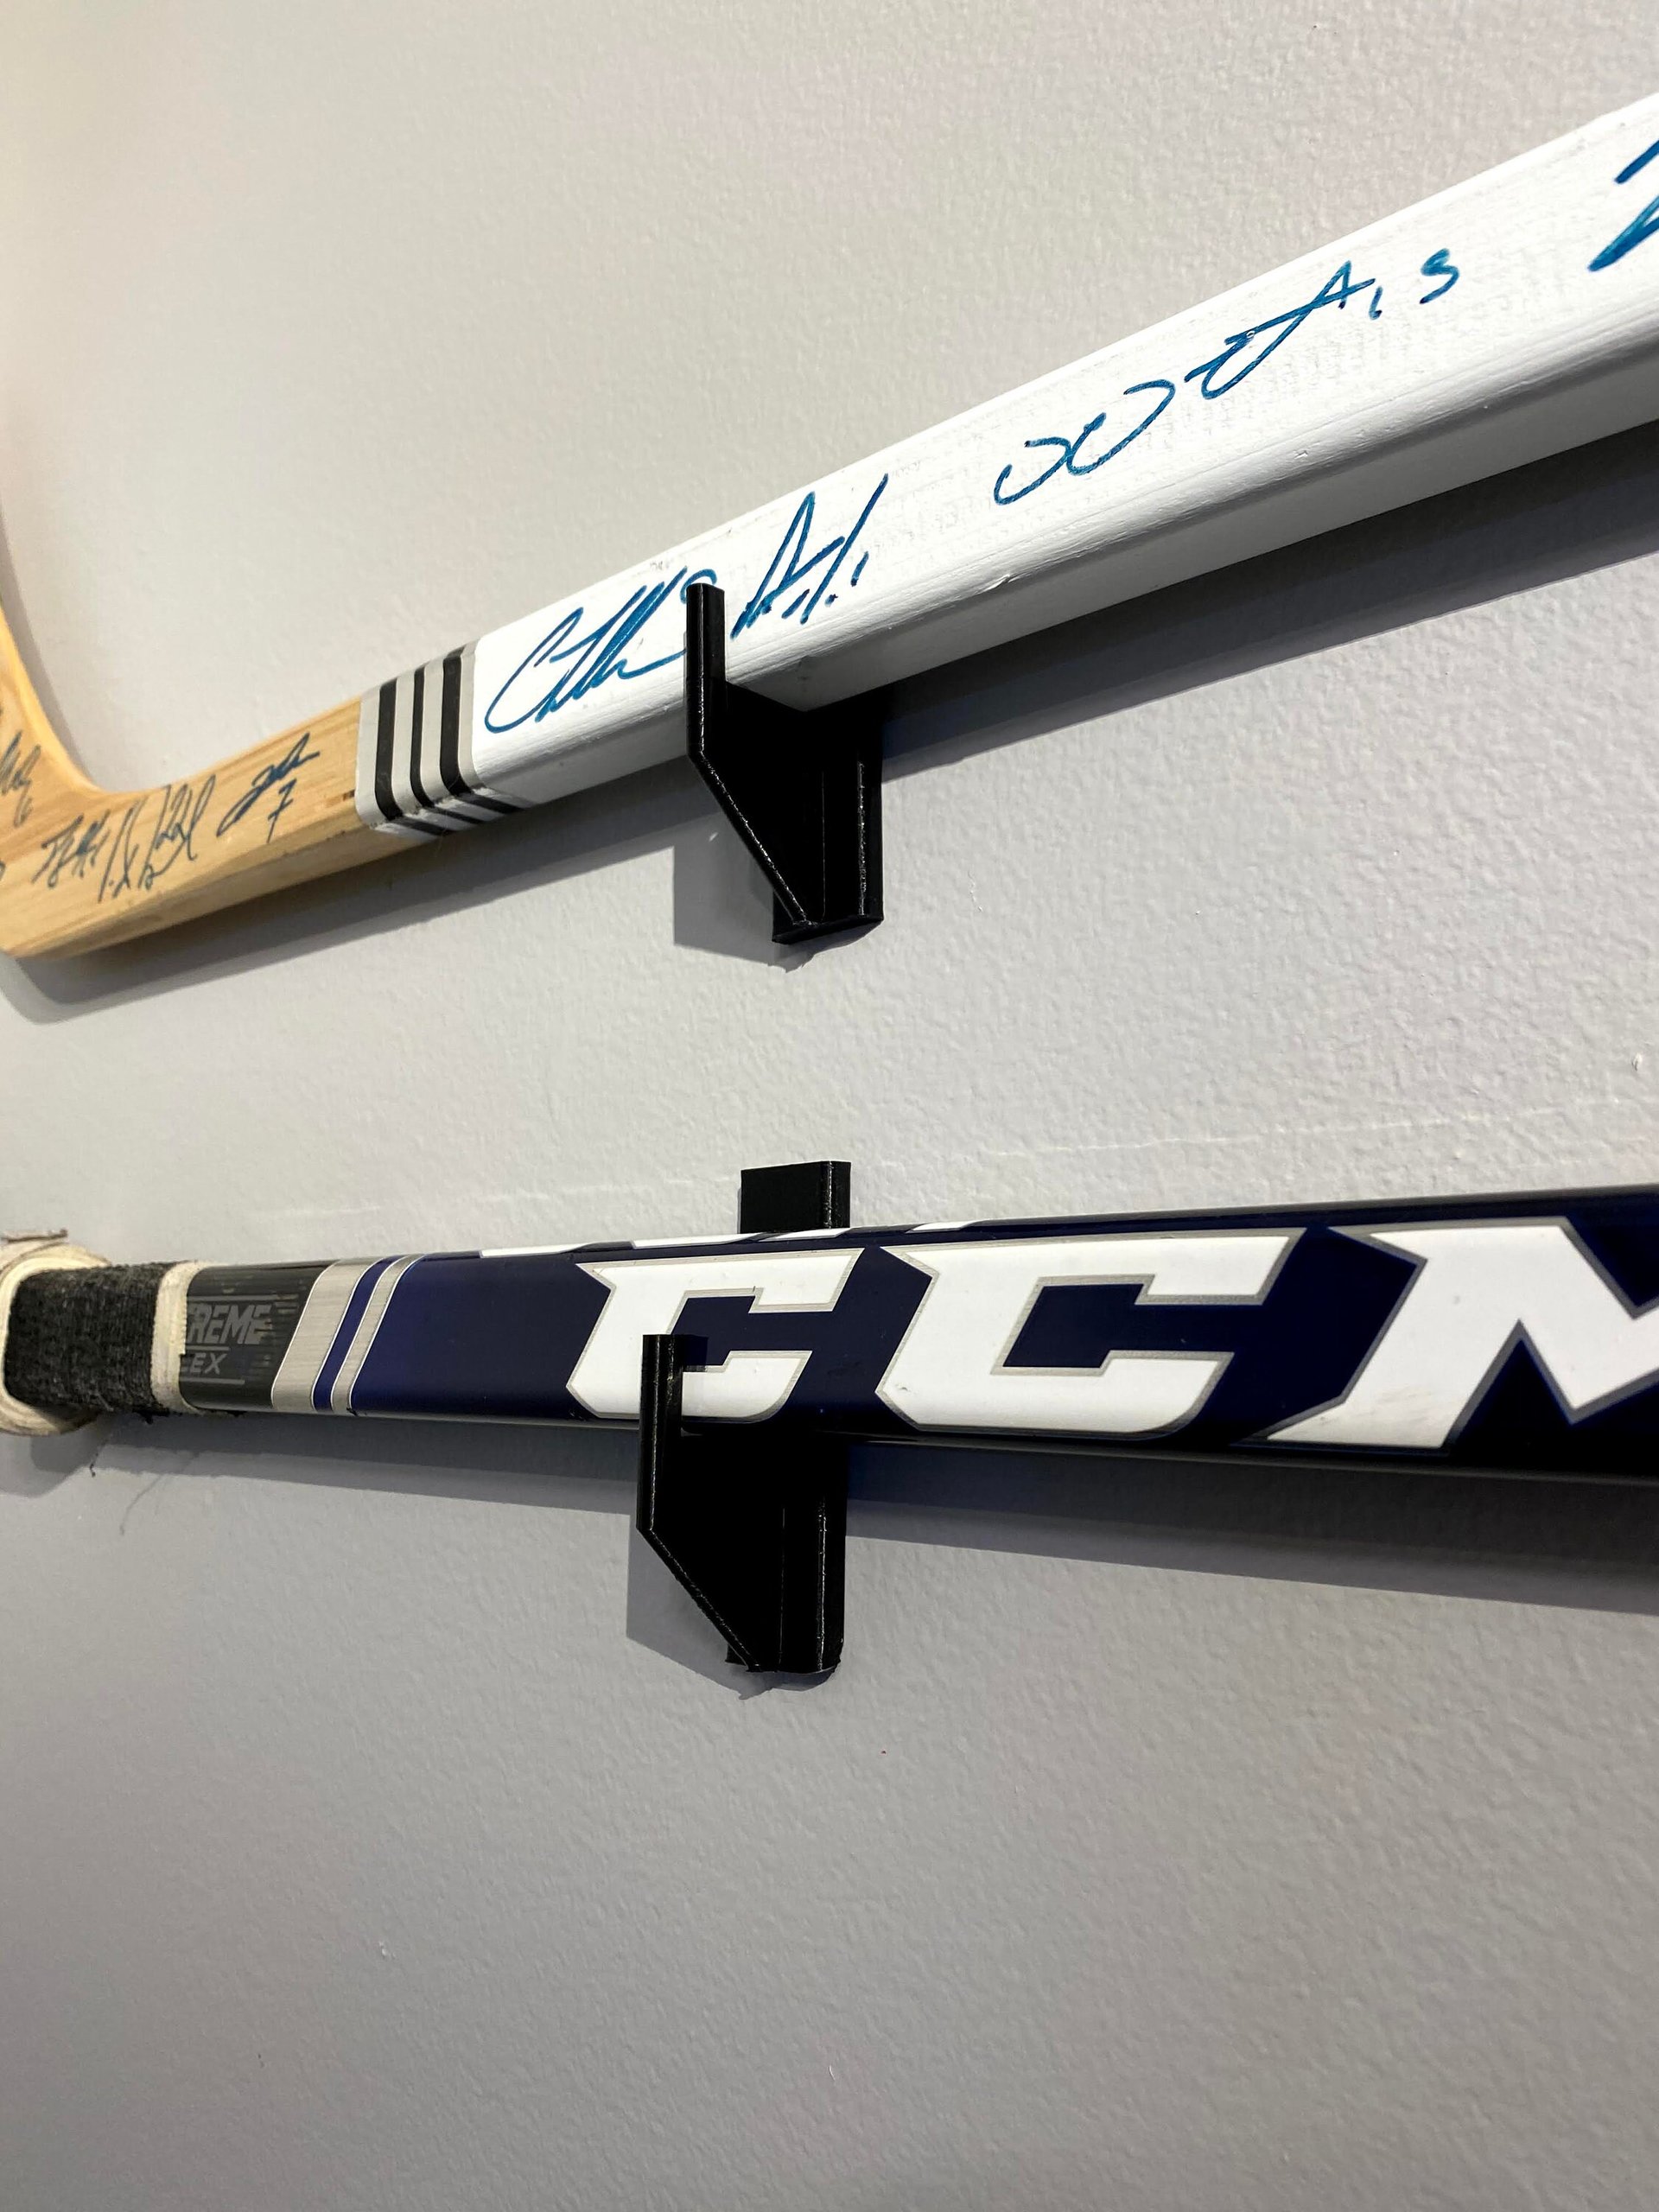 Hockey Goalie Stick Wall Display Holder